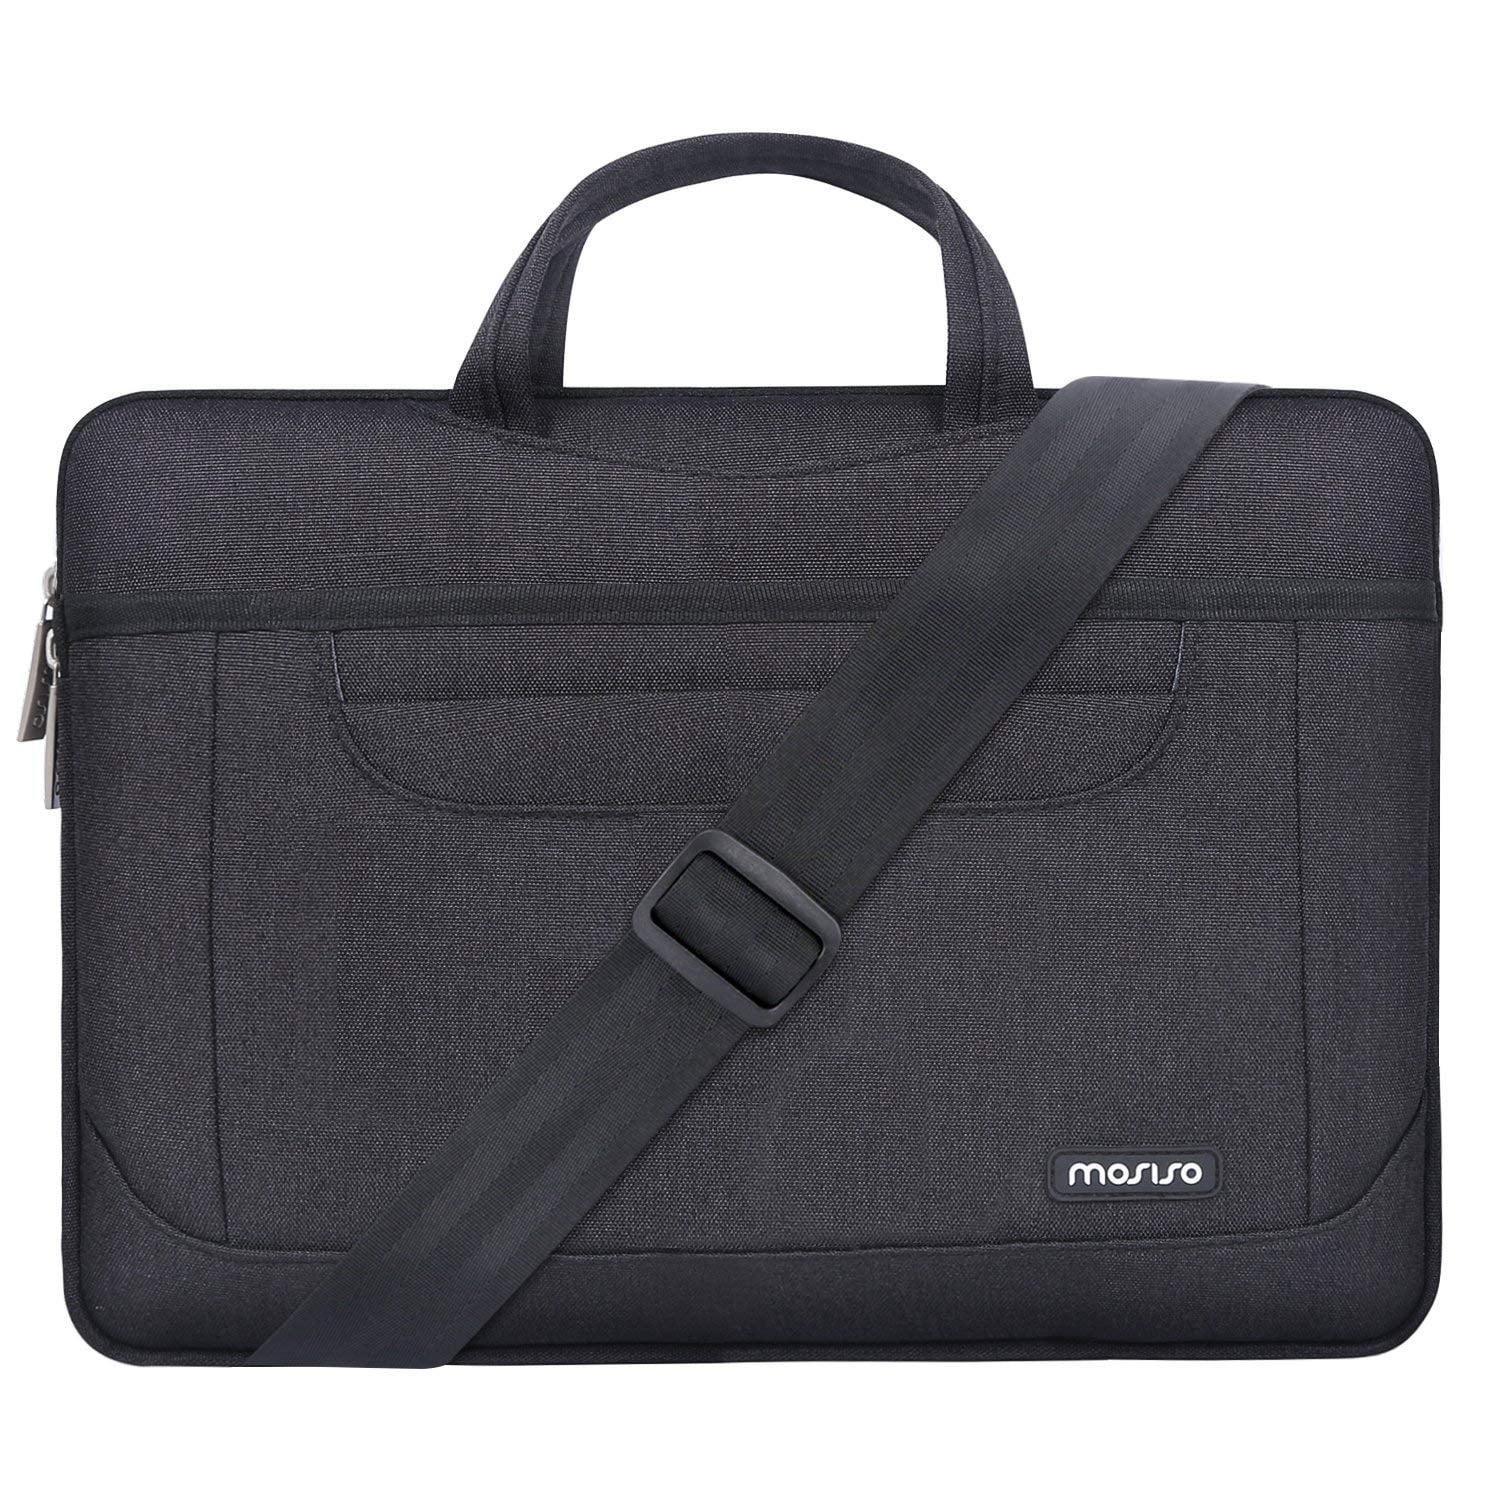 Mosiso Laptop Shoulder Bag for 13-13.3 Inch MacBook Pro, MacBook Air ...